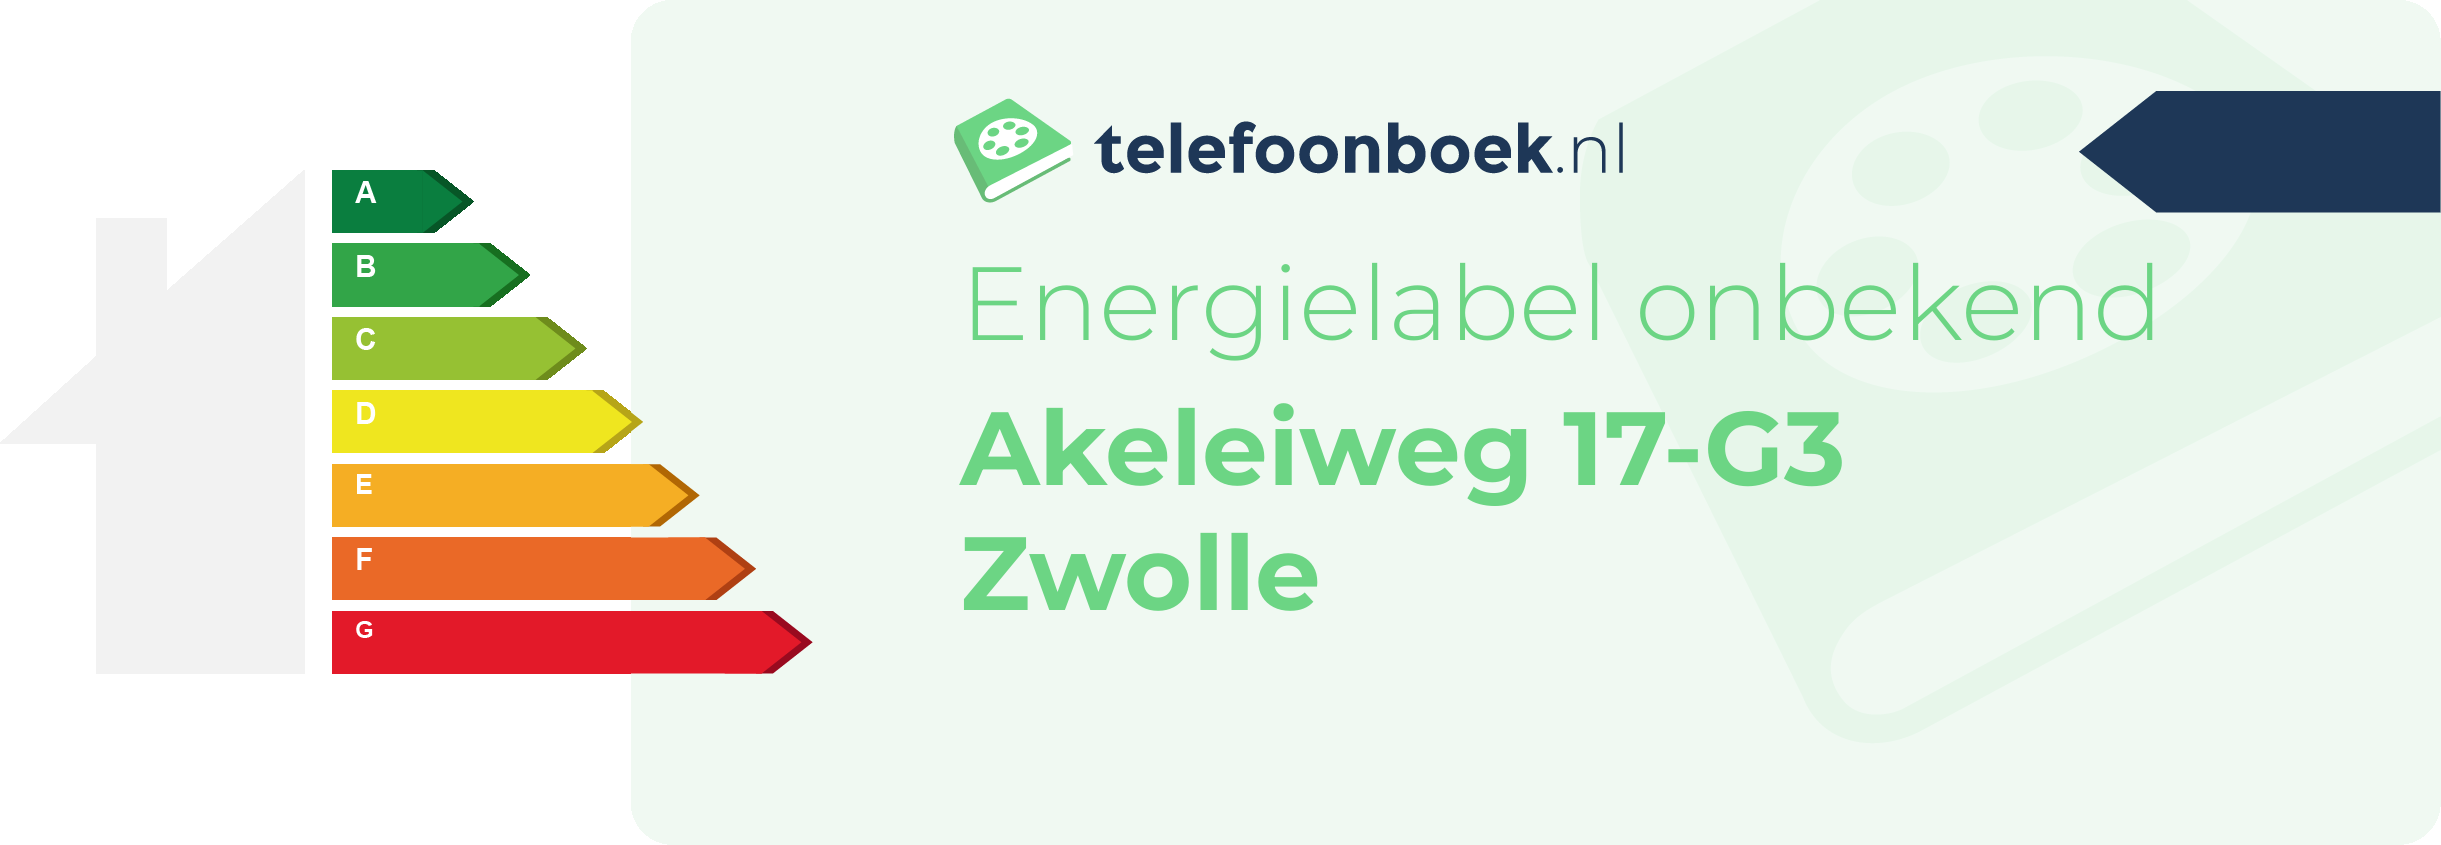 Energielabel Akeleiweg 17-G3 Zwolle